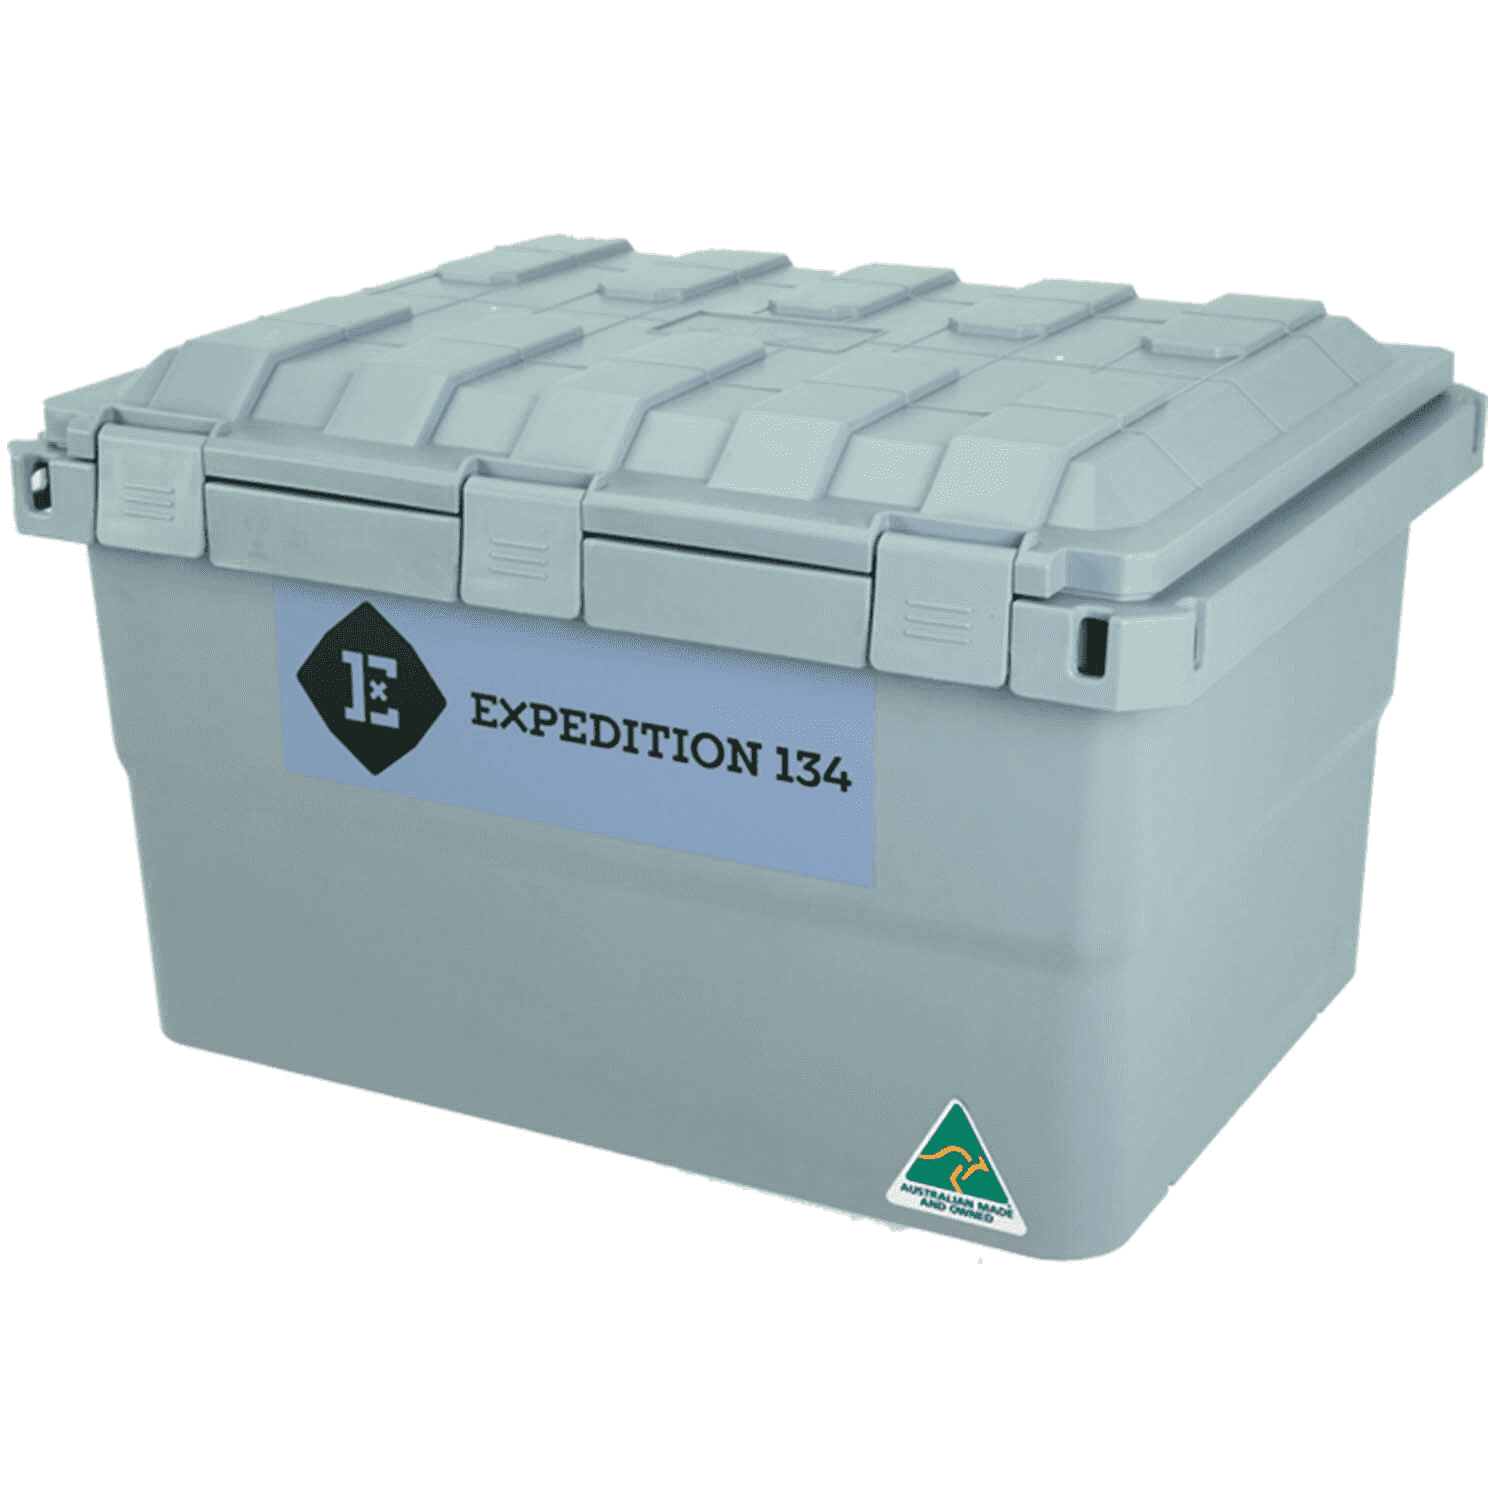 Expedition134 Heavy Duty Plastic Storage Box 55L - Black